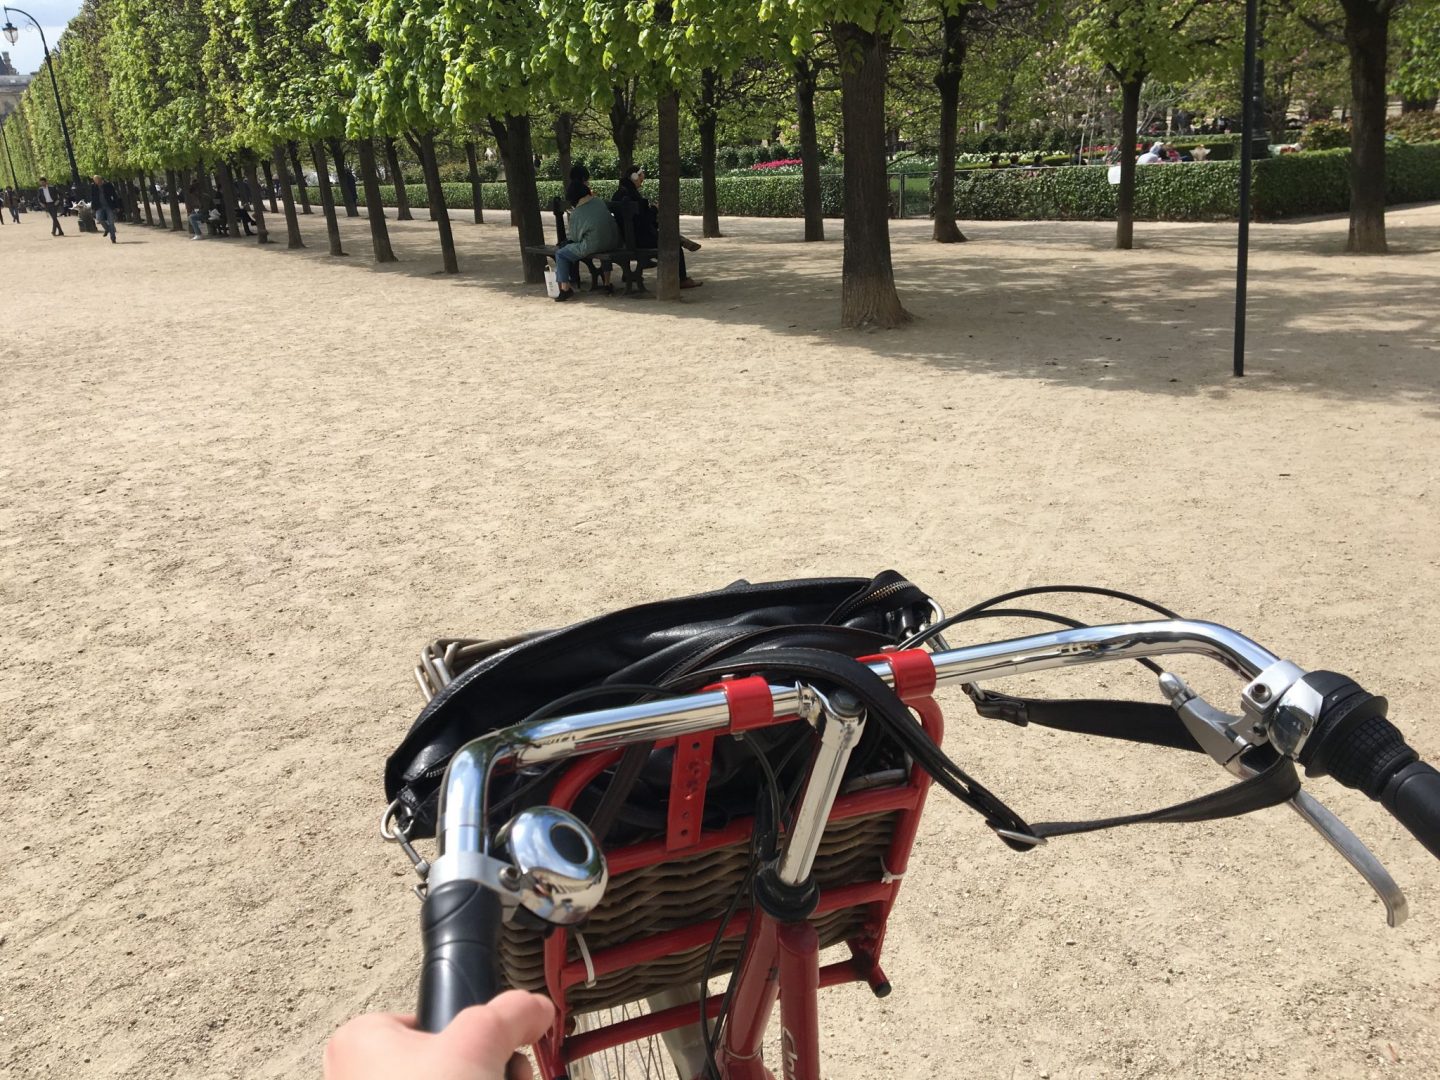 My week 15: First biking tour and a concert in Paris